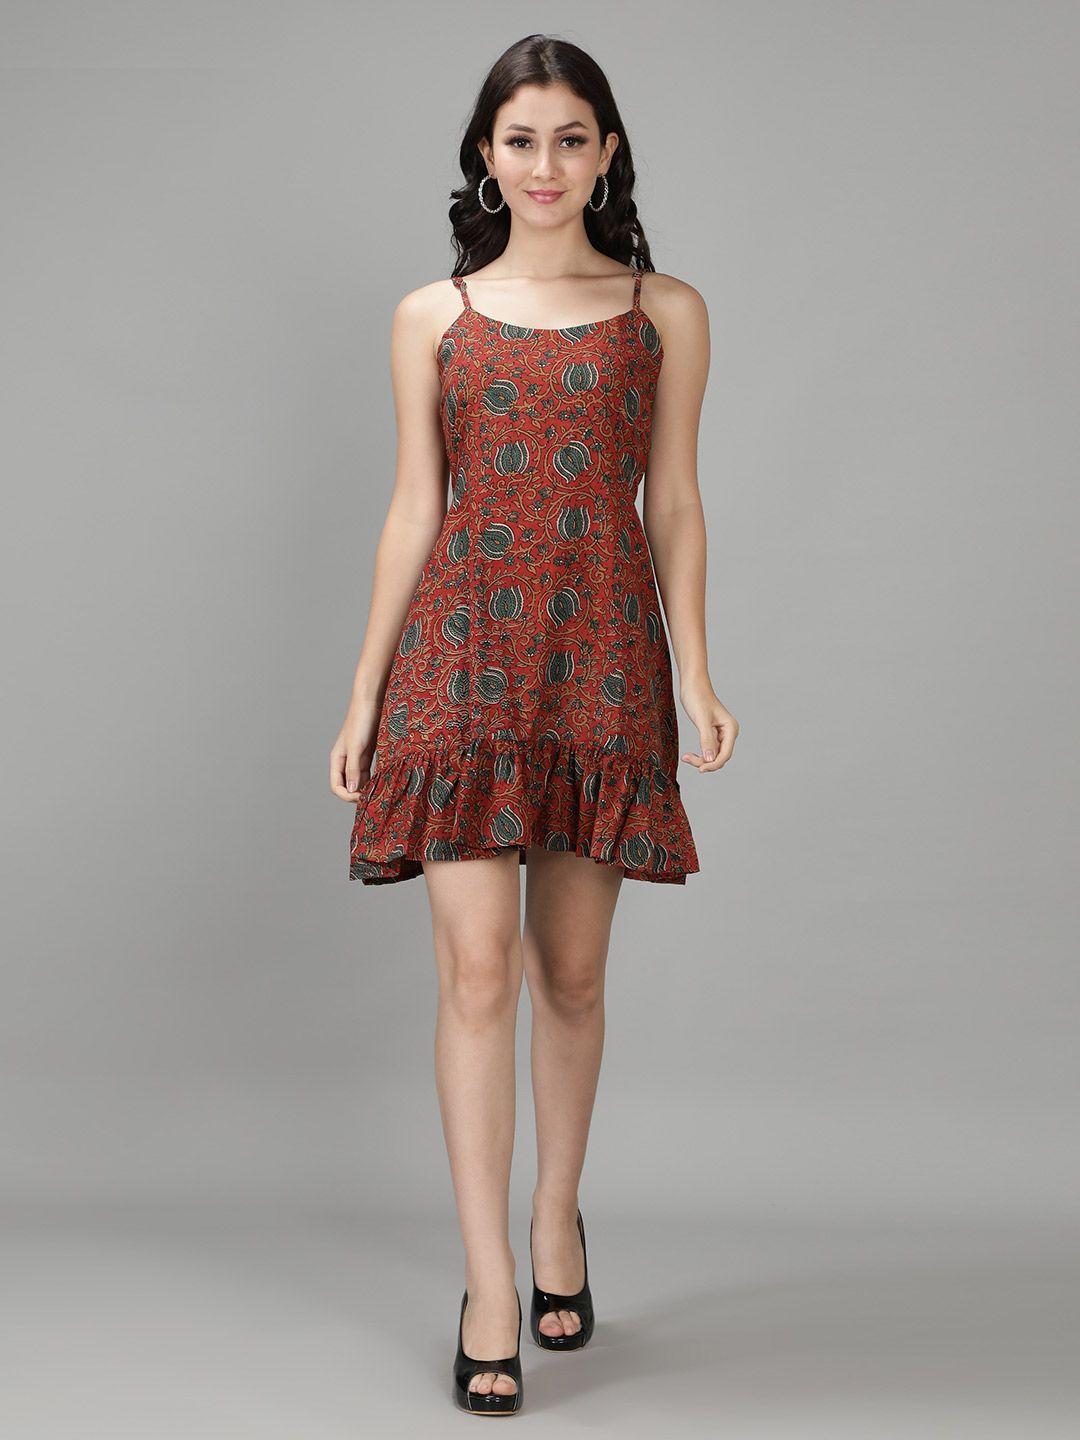 sajke red ethnic motifs a-line dress